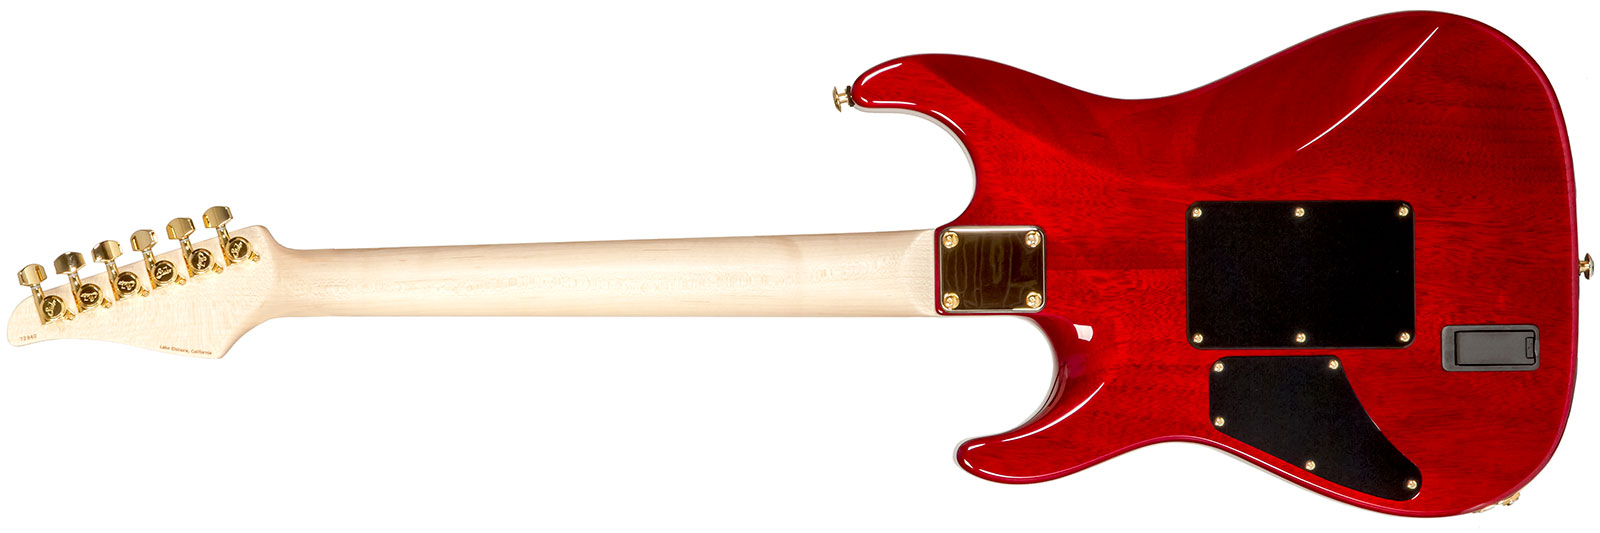 Suhr Standard Legacy 01-ltd-0030 Hss Emg Fr Rw #72940 - Aged Cherry Burst - Guitarra eléctrica con forma de str. - Variation 1